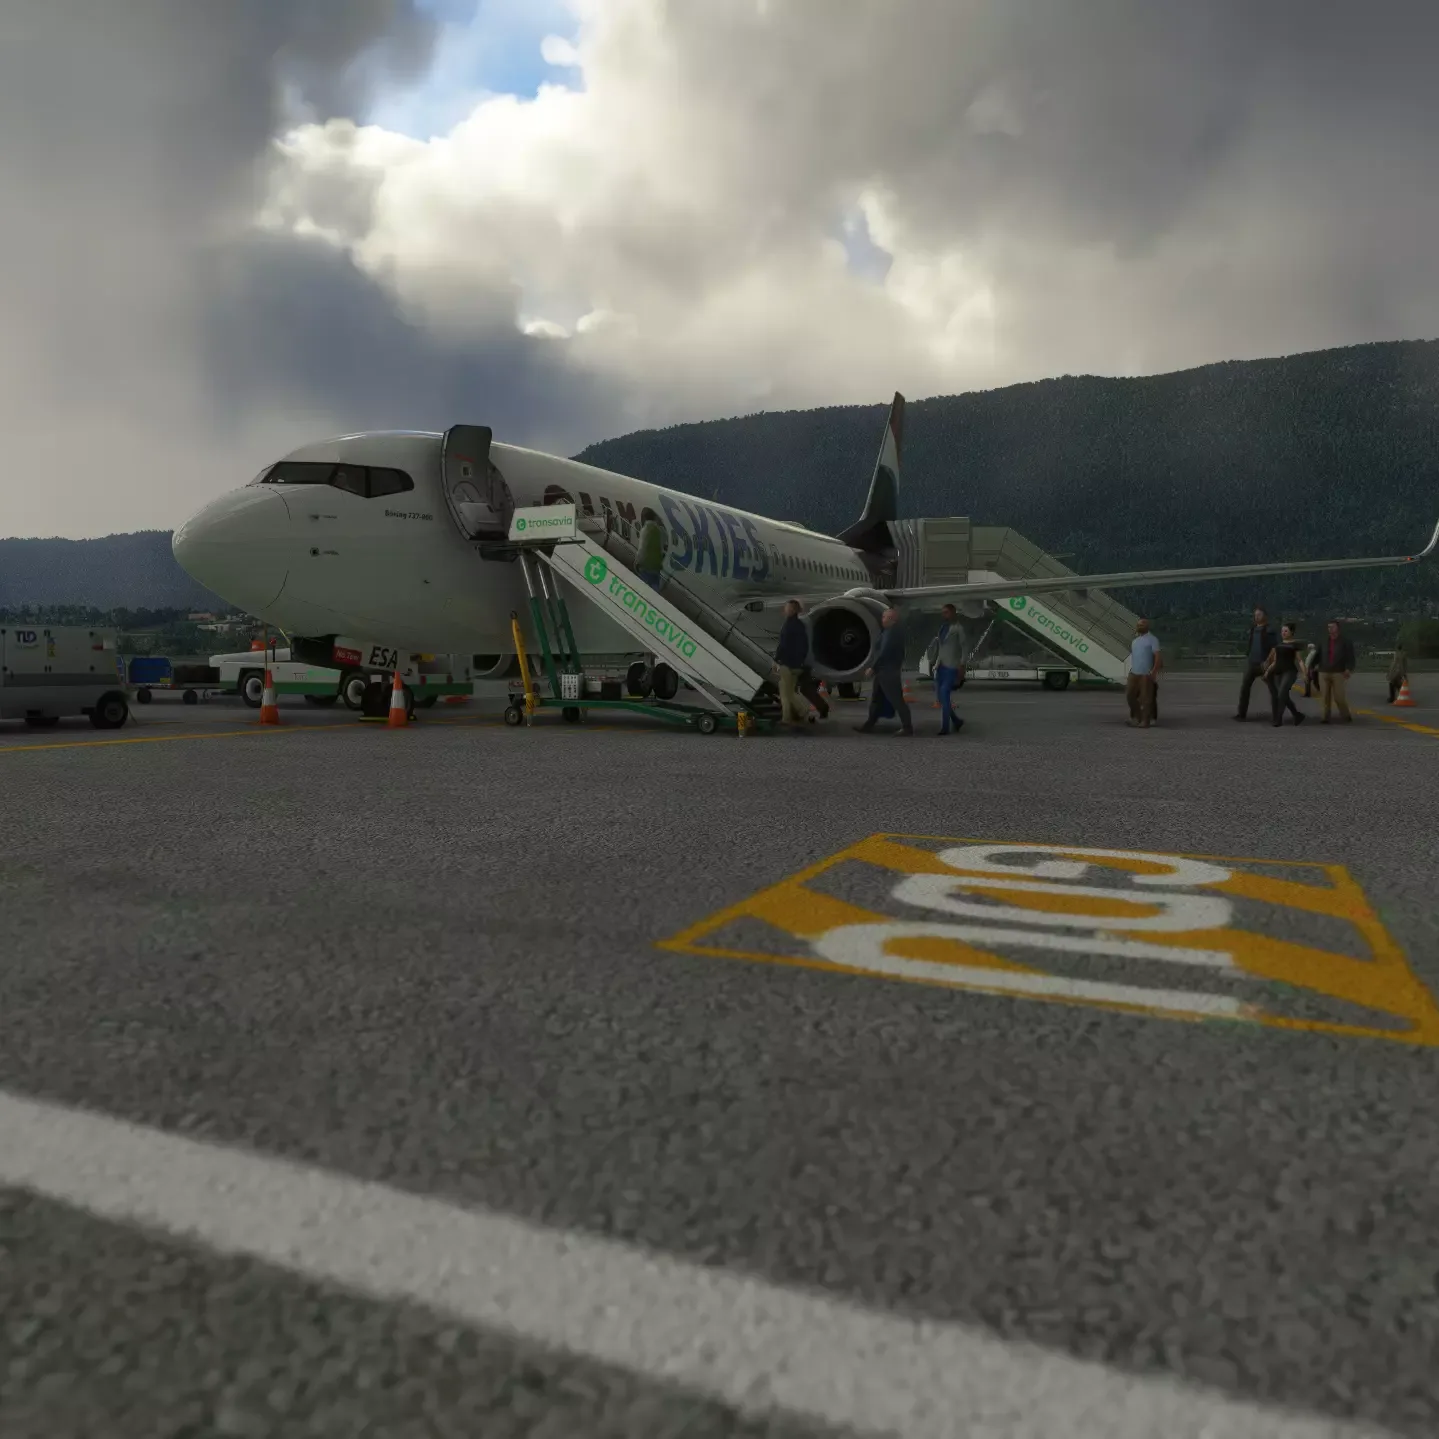 euroSKIES member boarding plane on ground